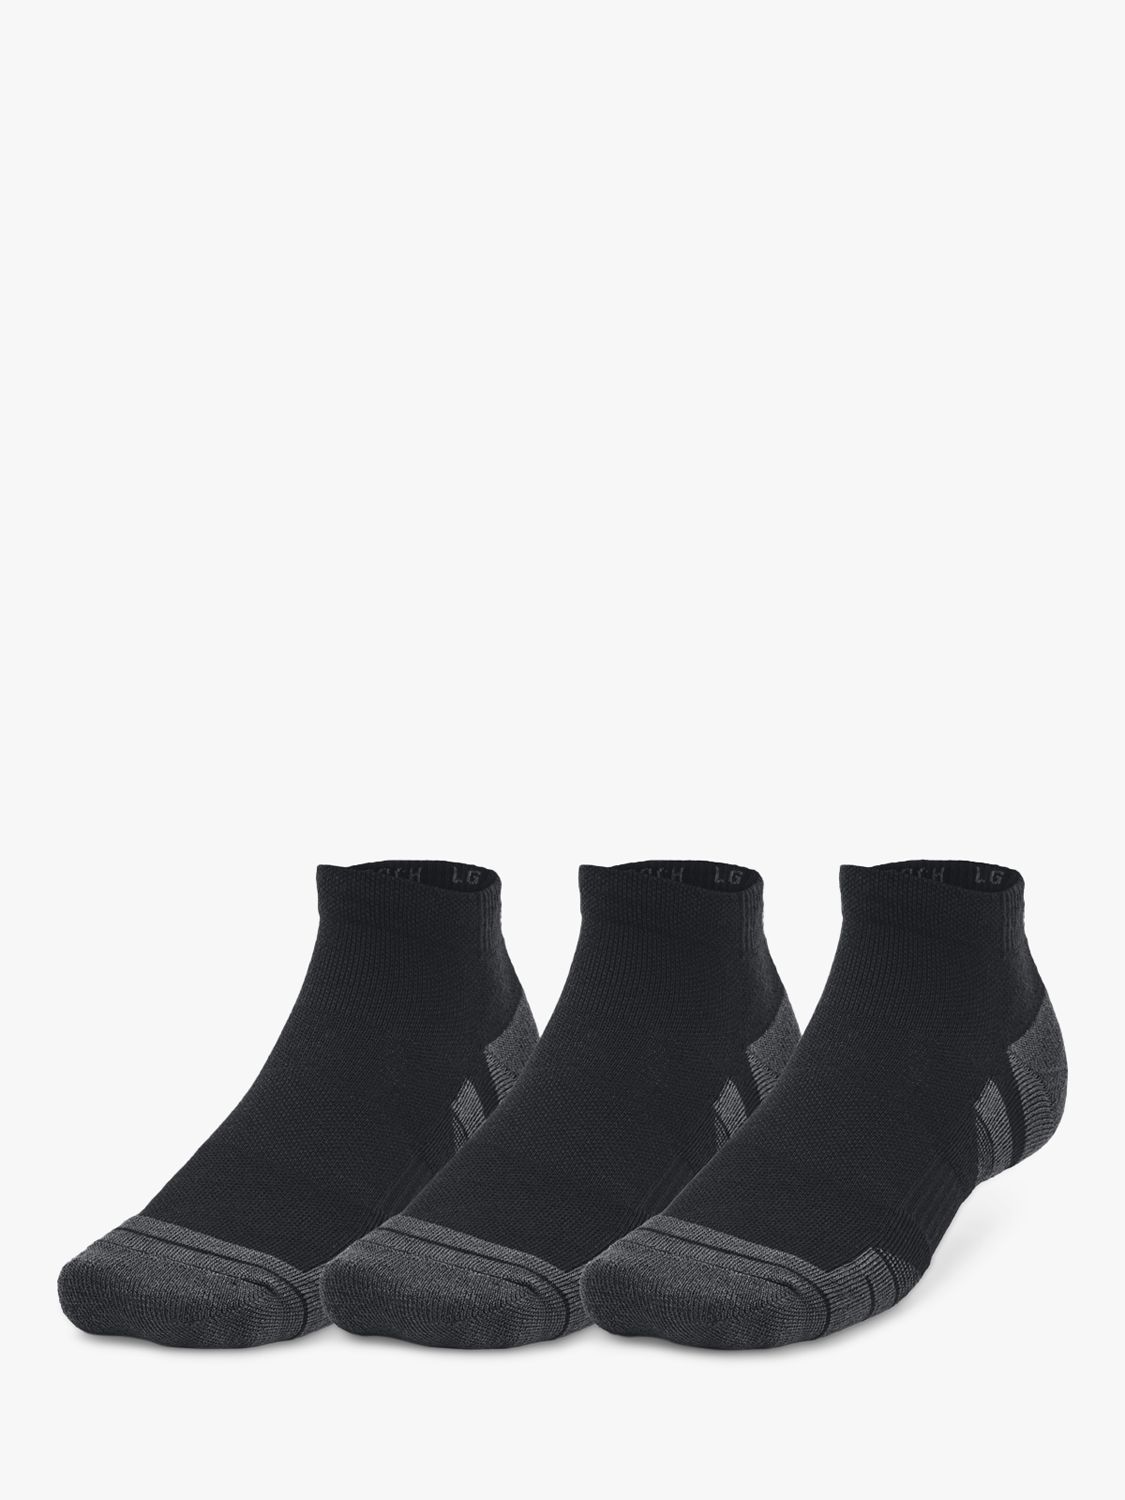 Under Armour Performance Tech Low Cut Socks, Pack of 3, Black/Jet Gray, XL